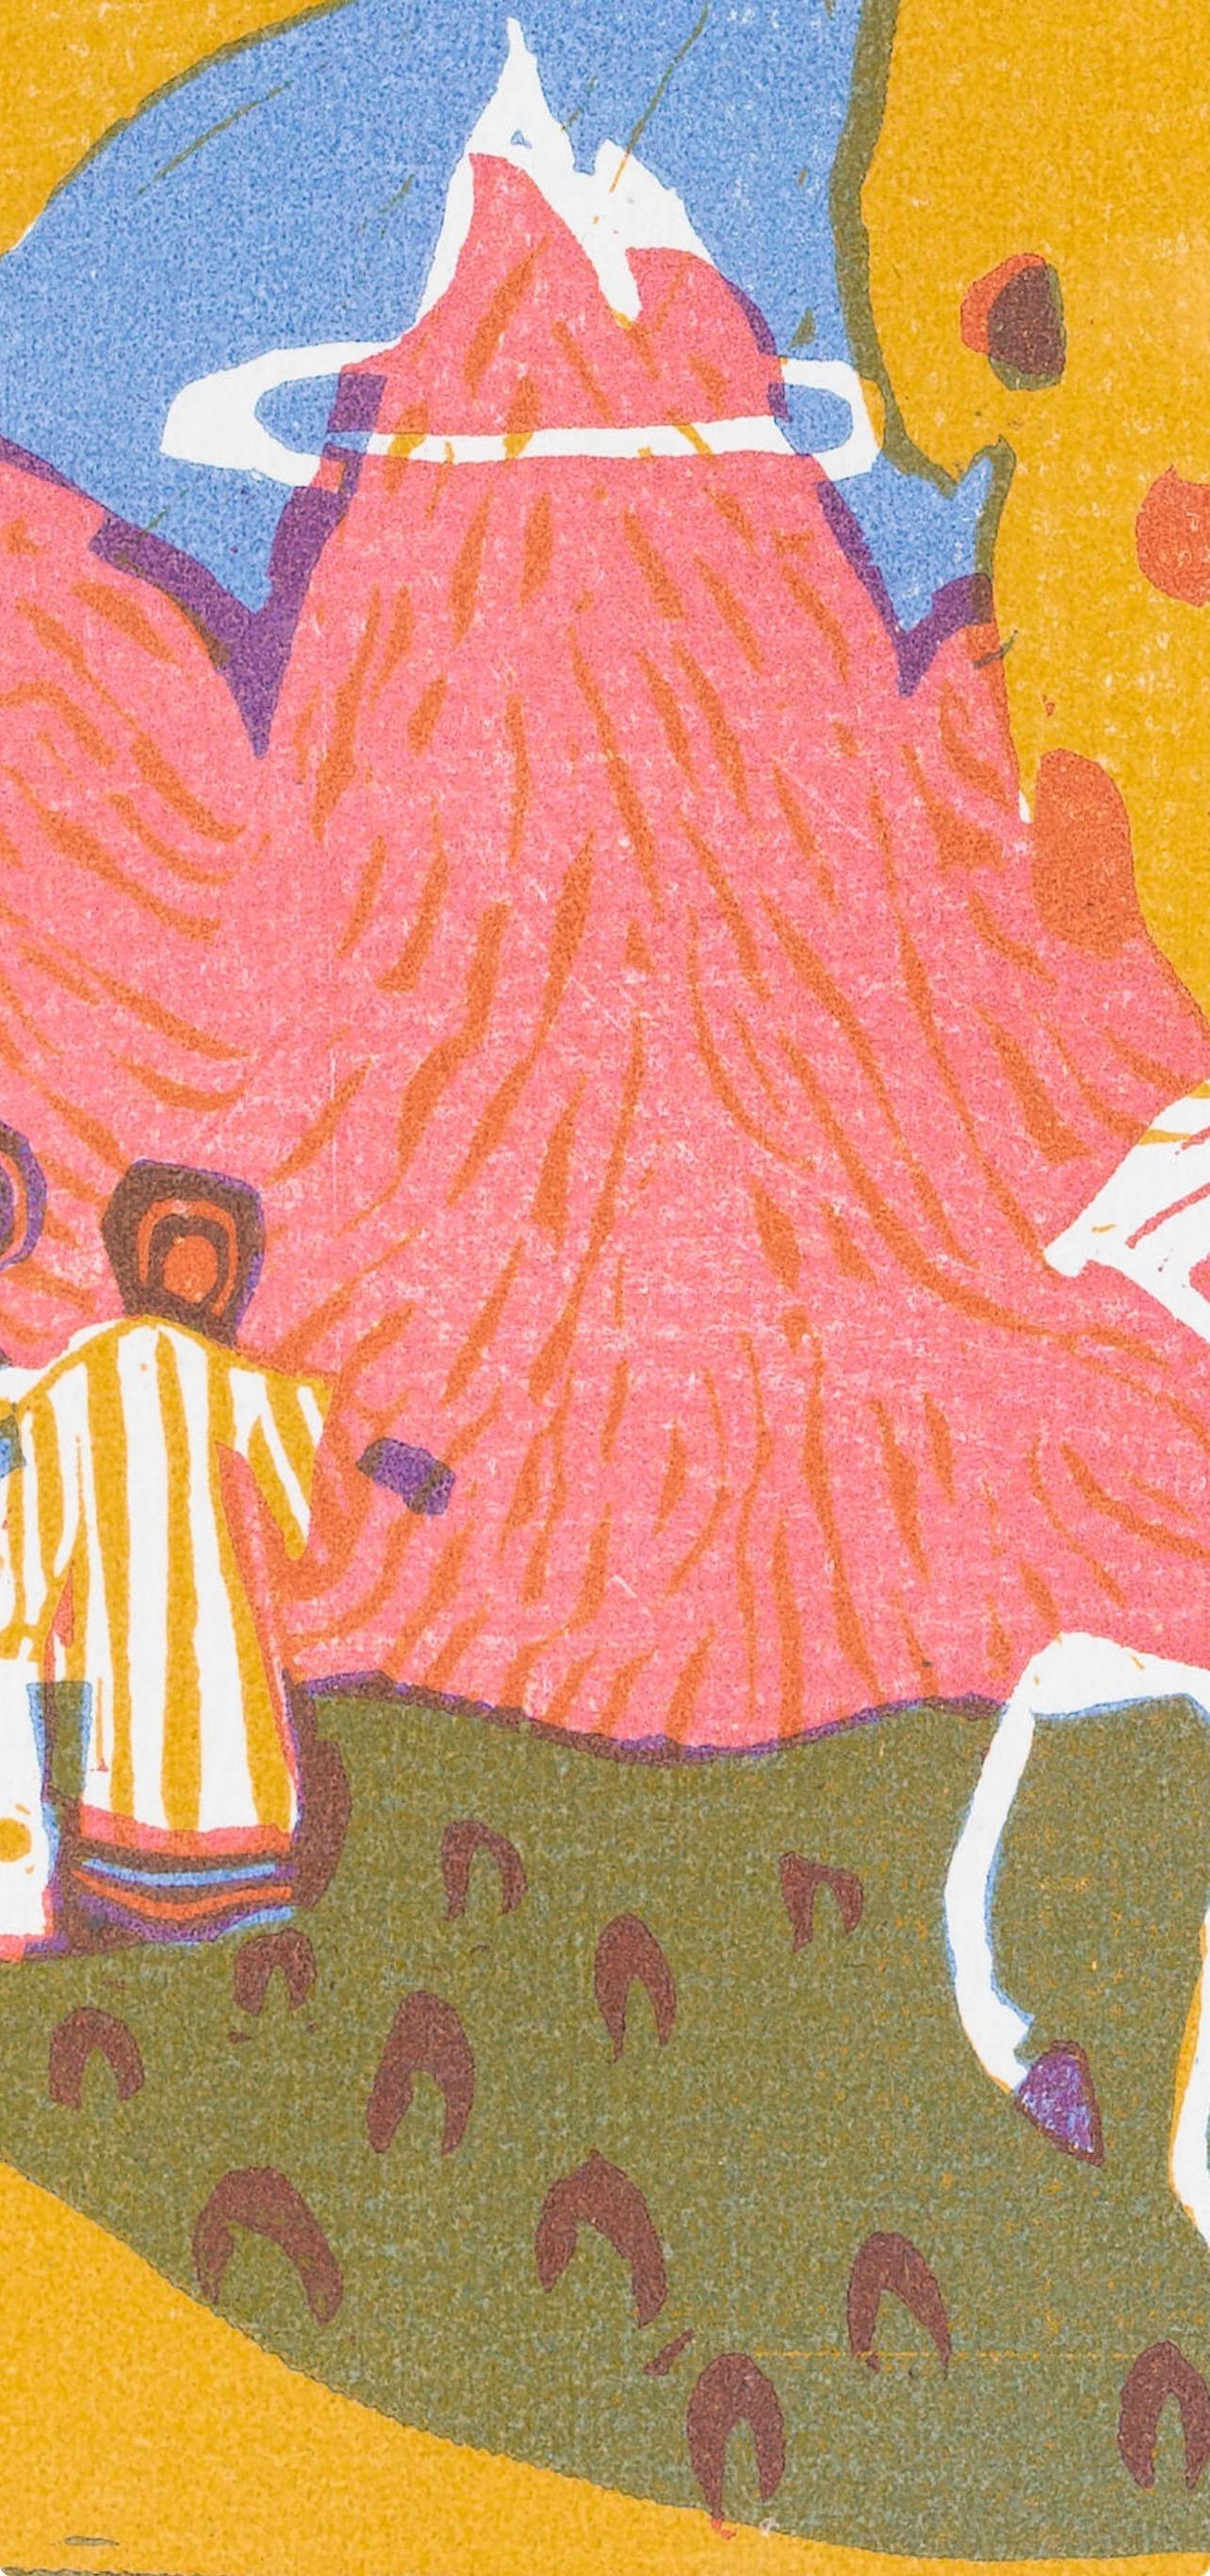 Kandinsky, Berge, XXe Siècle (after) - Modern Print by Wassily Kandinsky